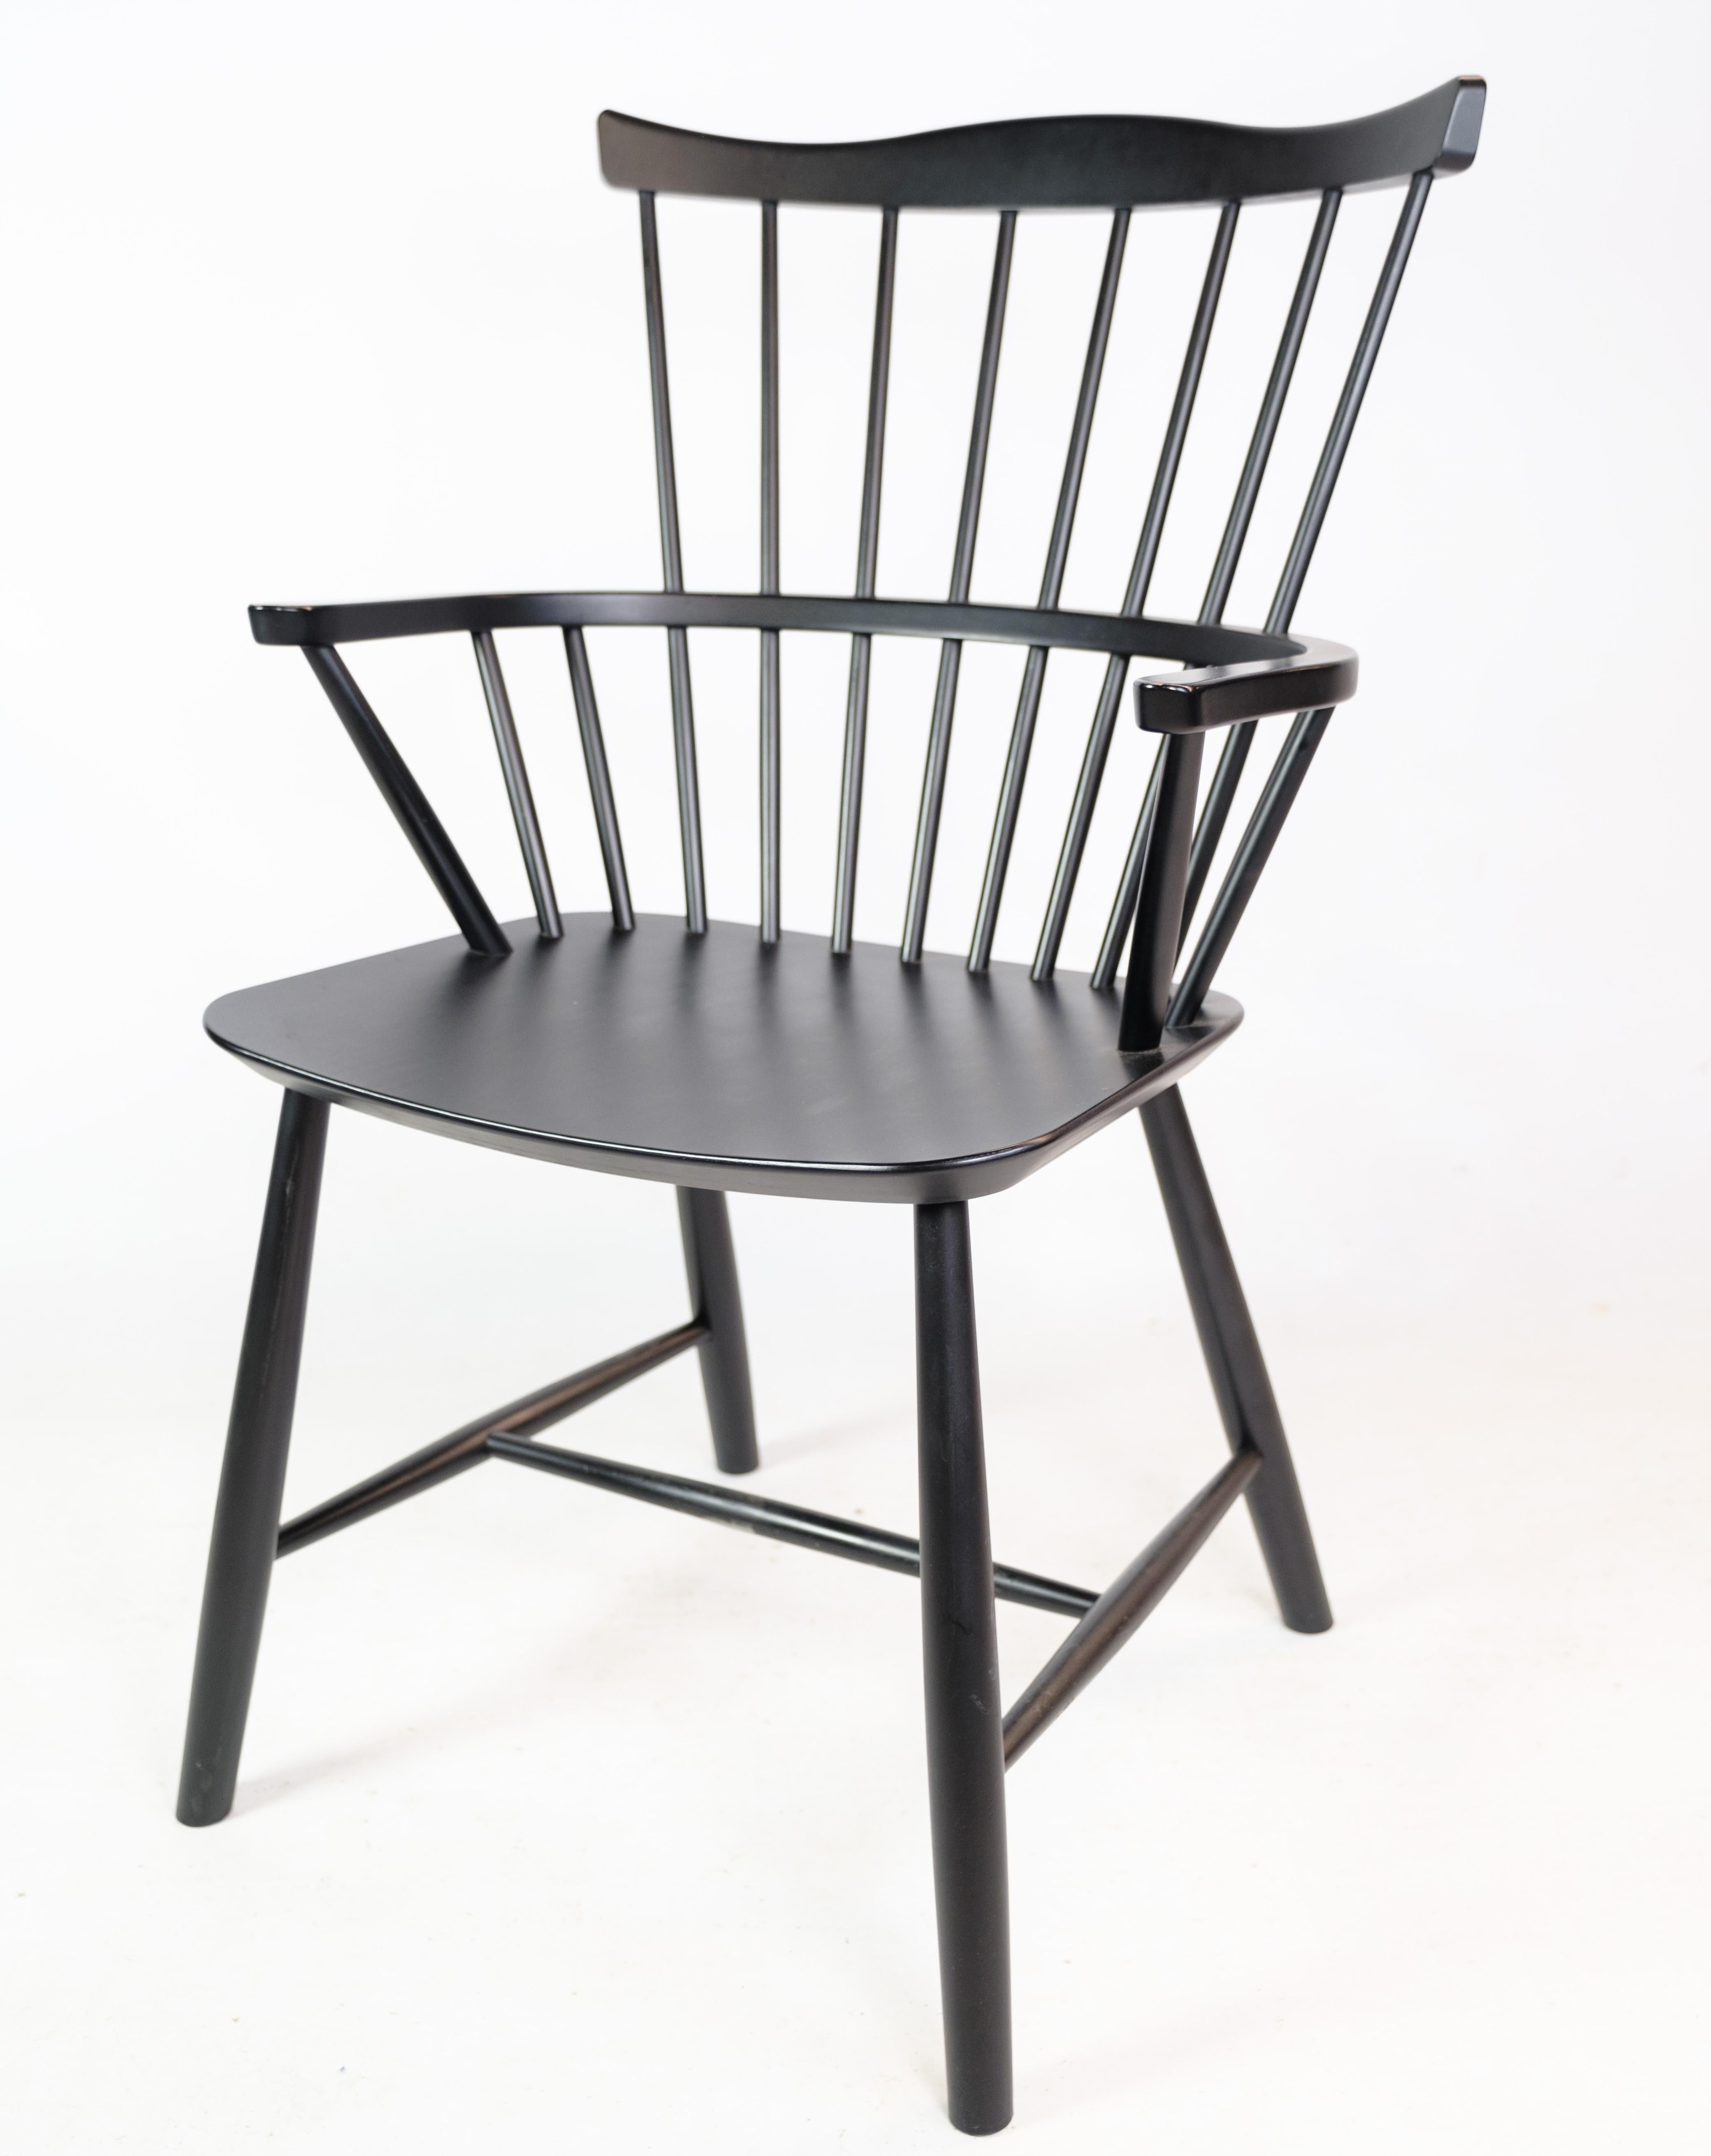 20th Century Dining Table Chairs, Model J52B, Beech Wood, FDB Møbler